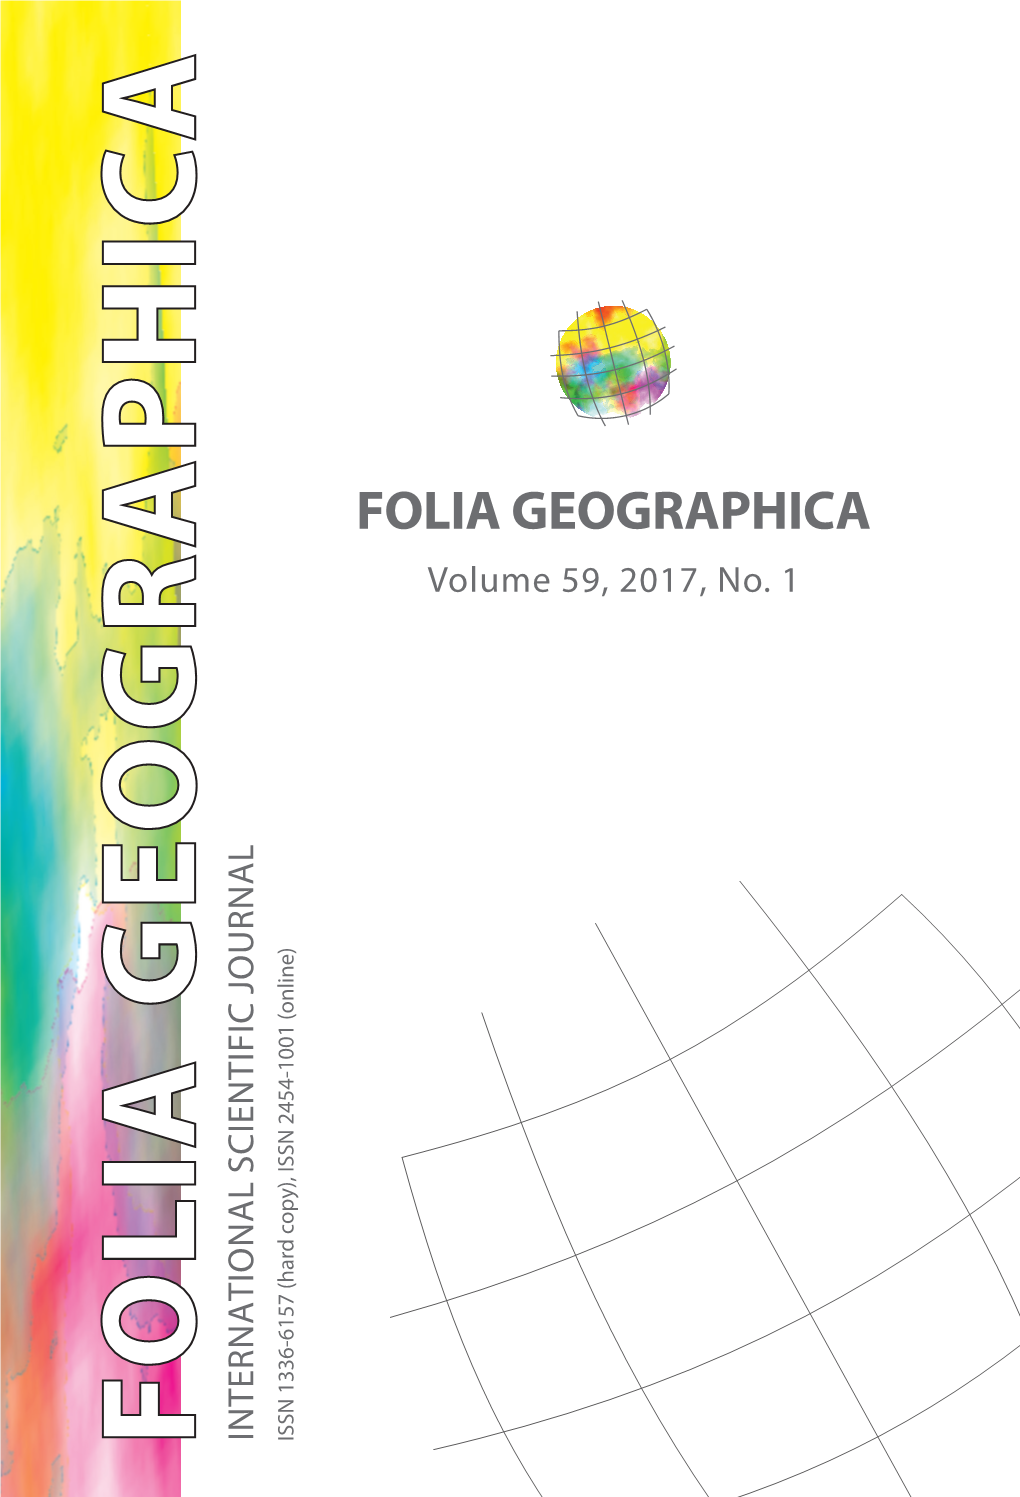 FOLIA GEOGRAPHICA, Volume 59, 2017, No. 1